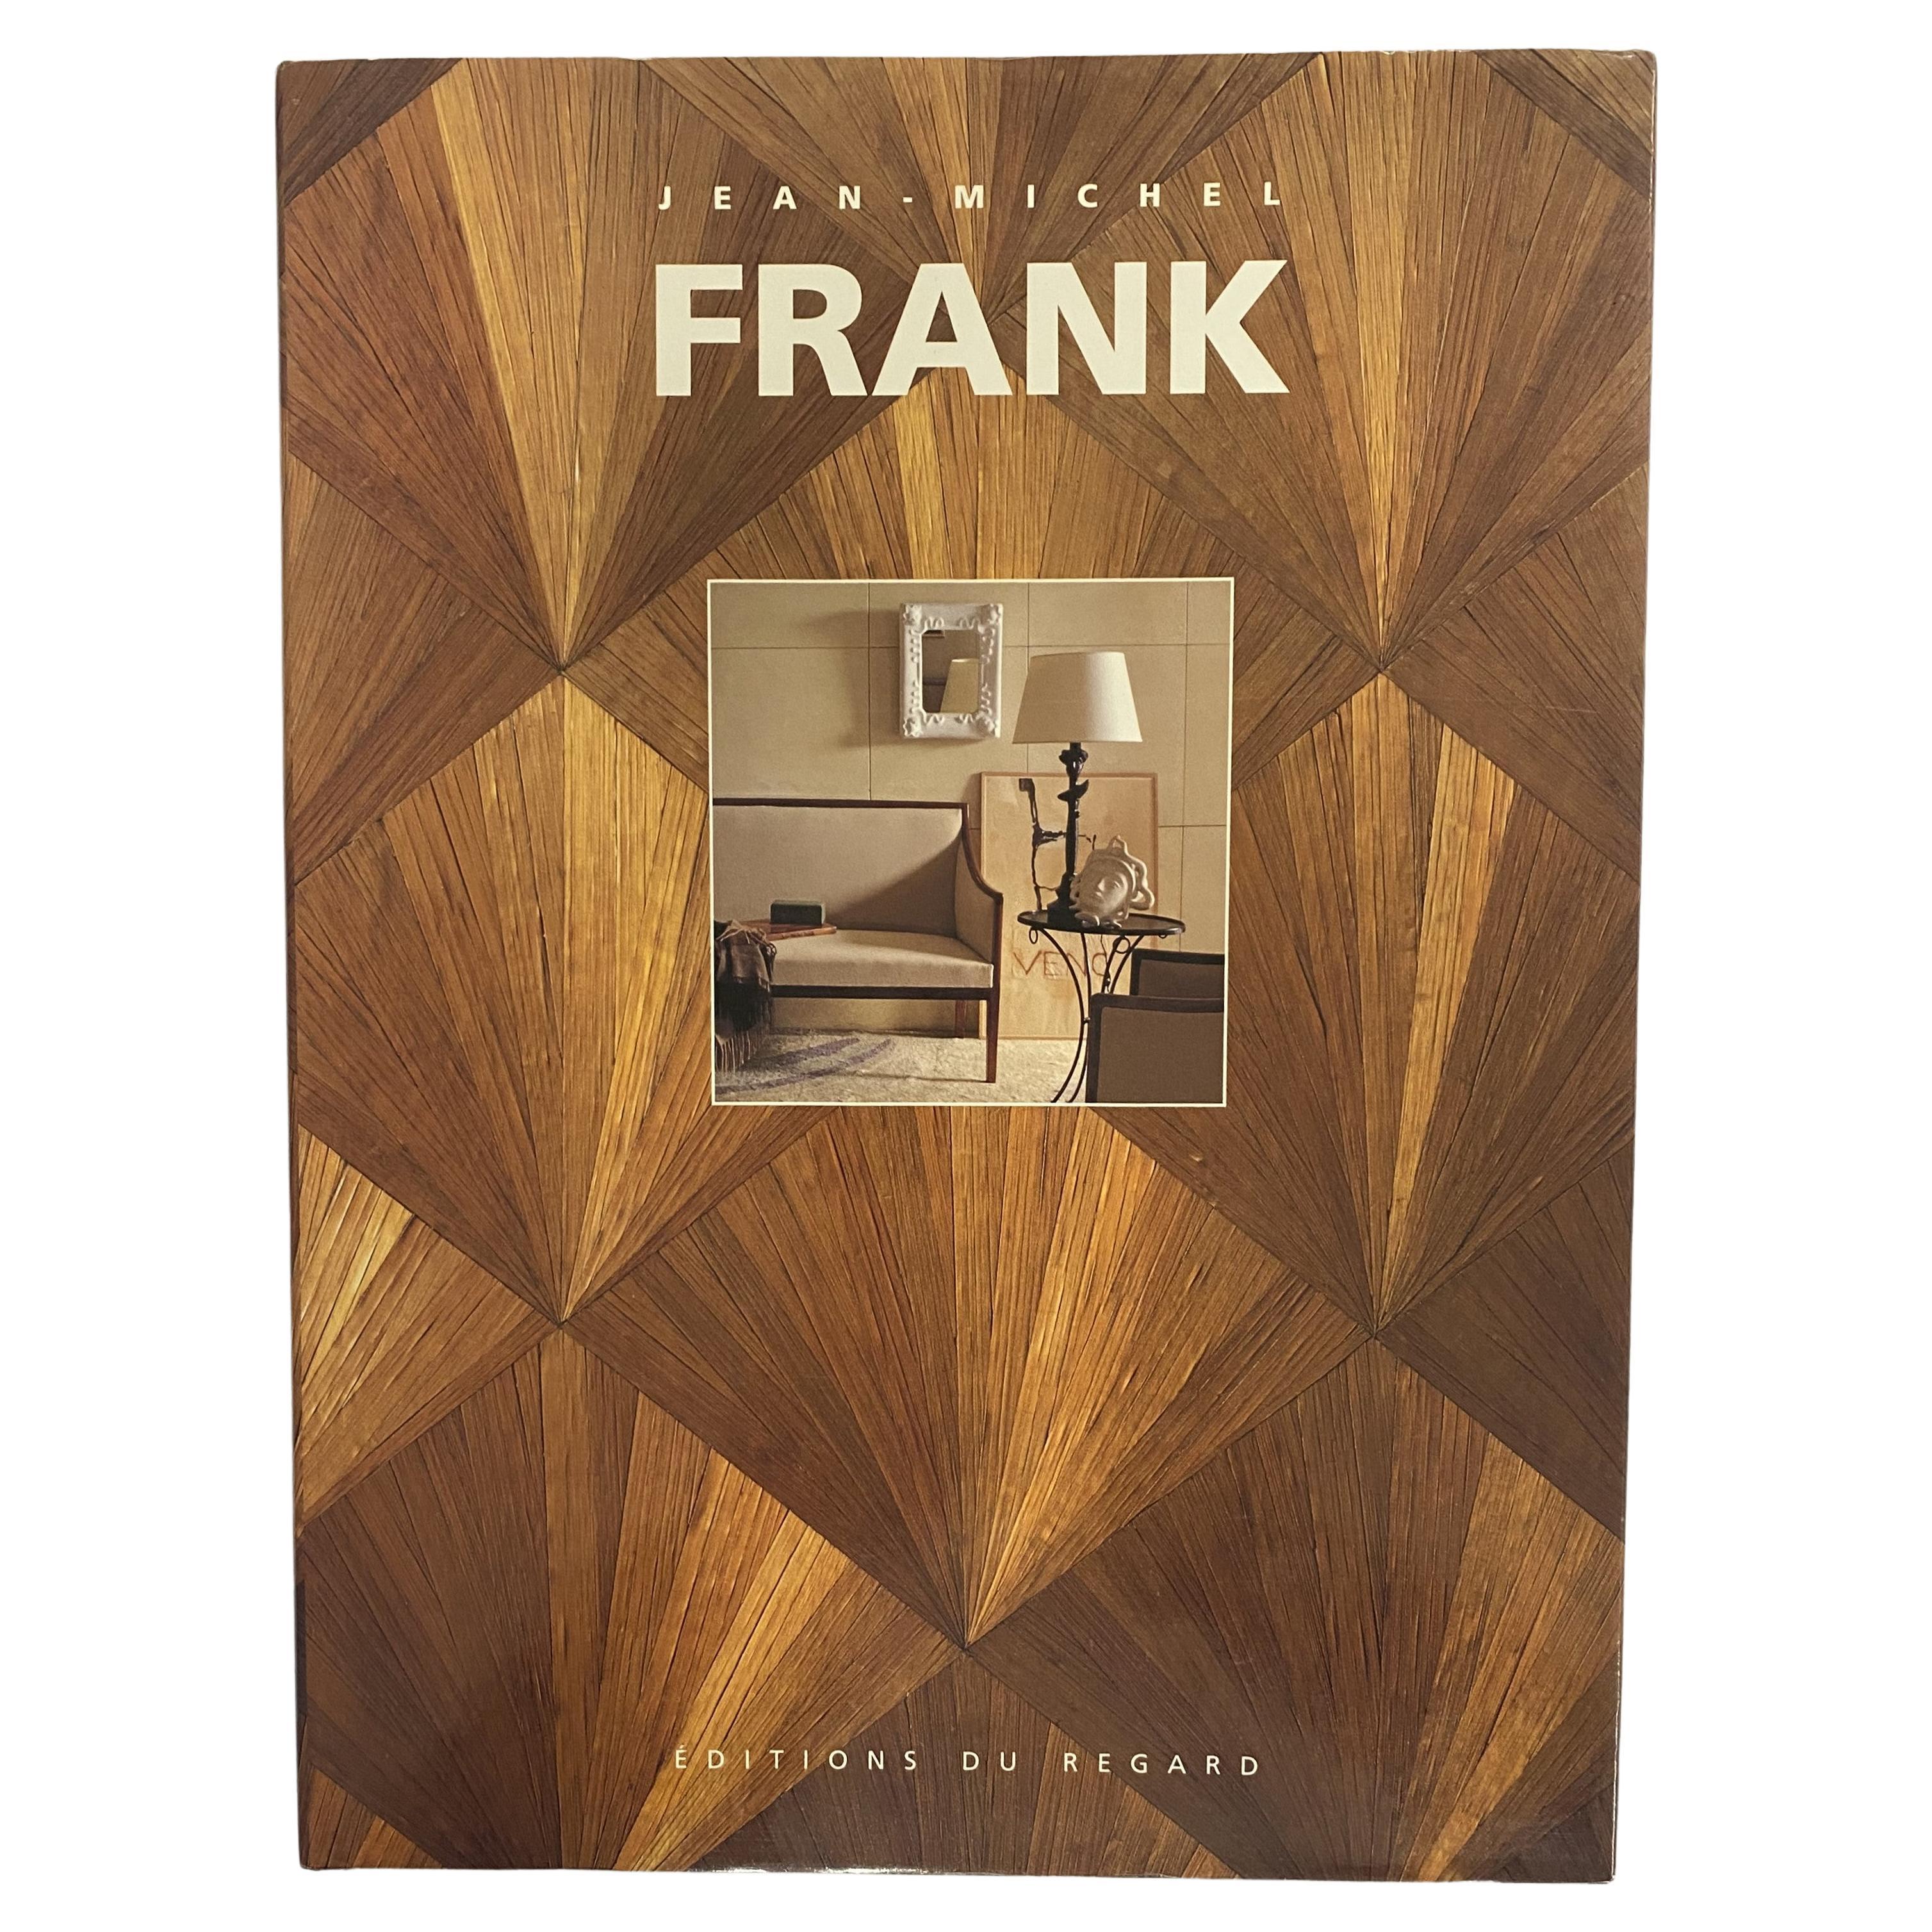 Jean-Michel Frank by Leopald Diego Sanchez (Book) For Sale